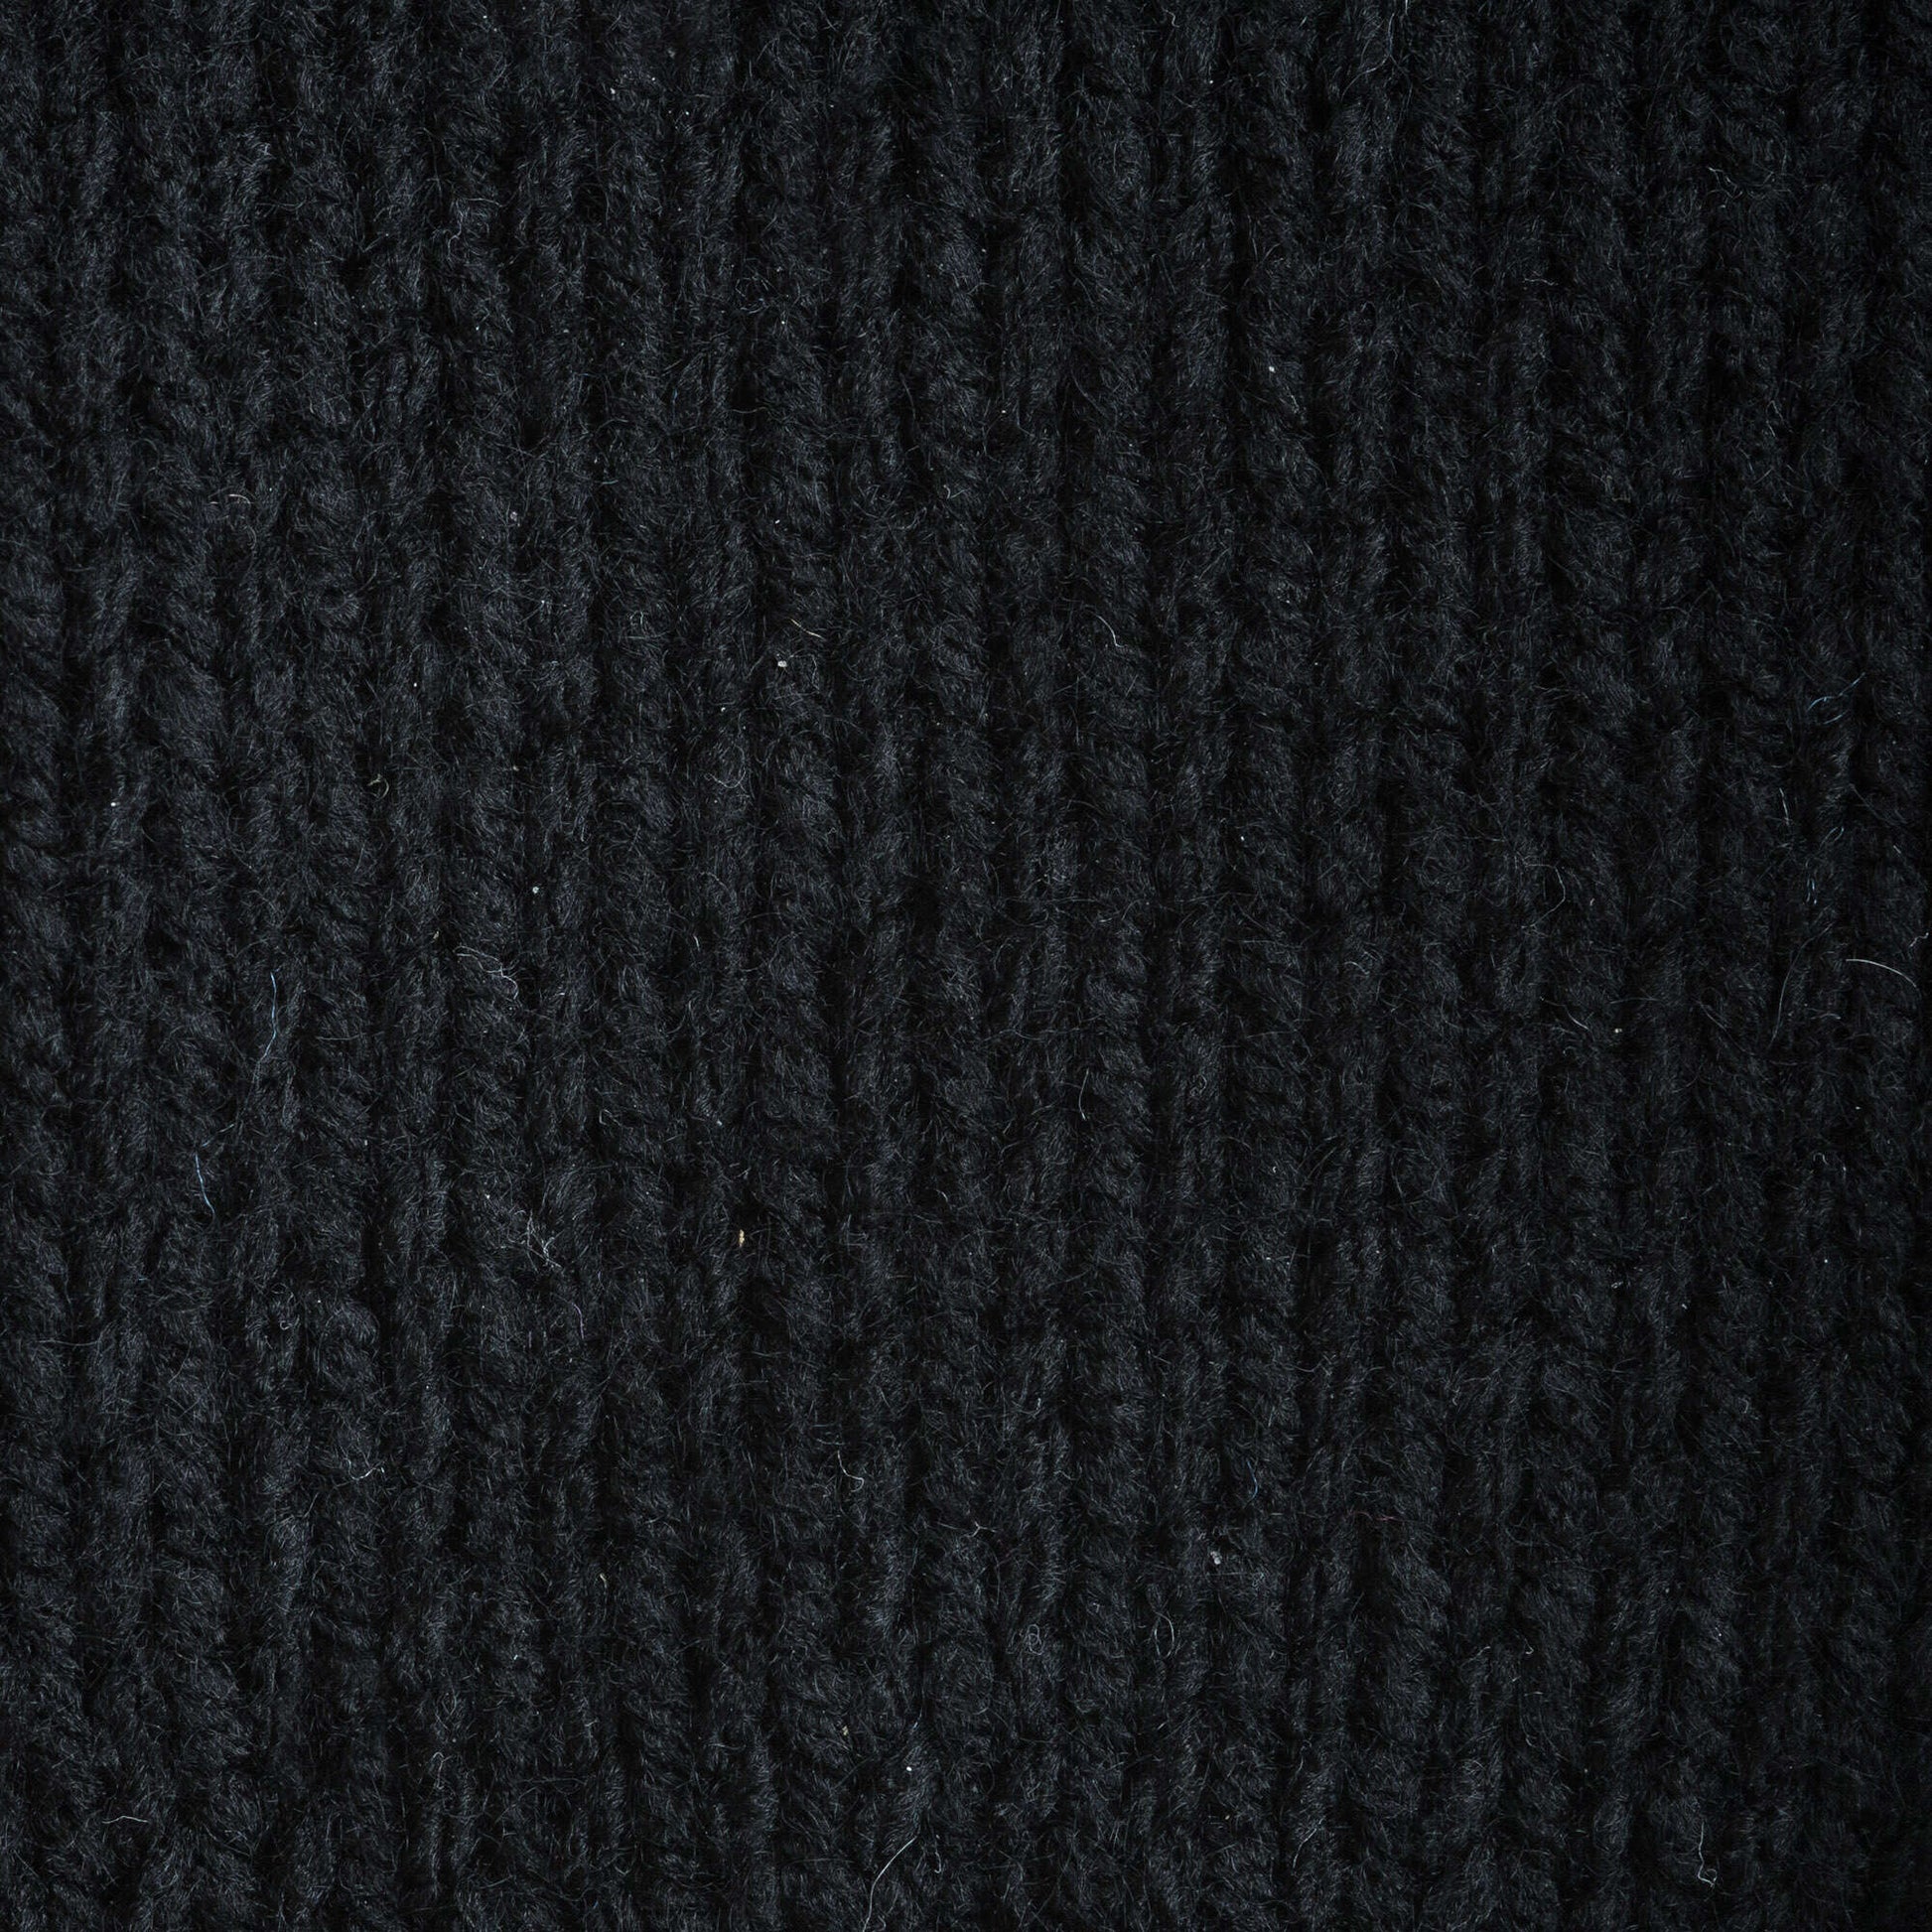 Phentex Worsted Yarn - Clearance shades Black